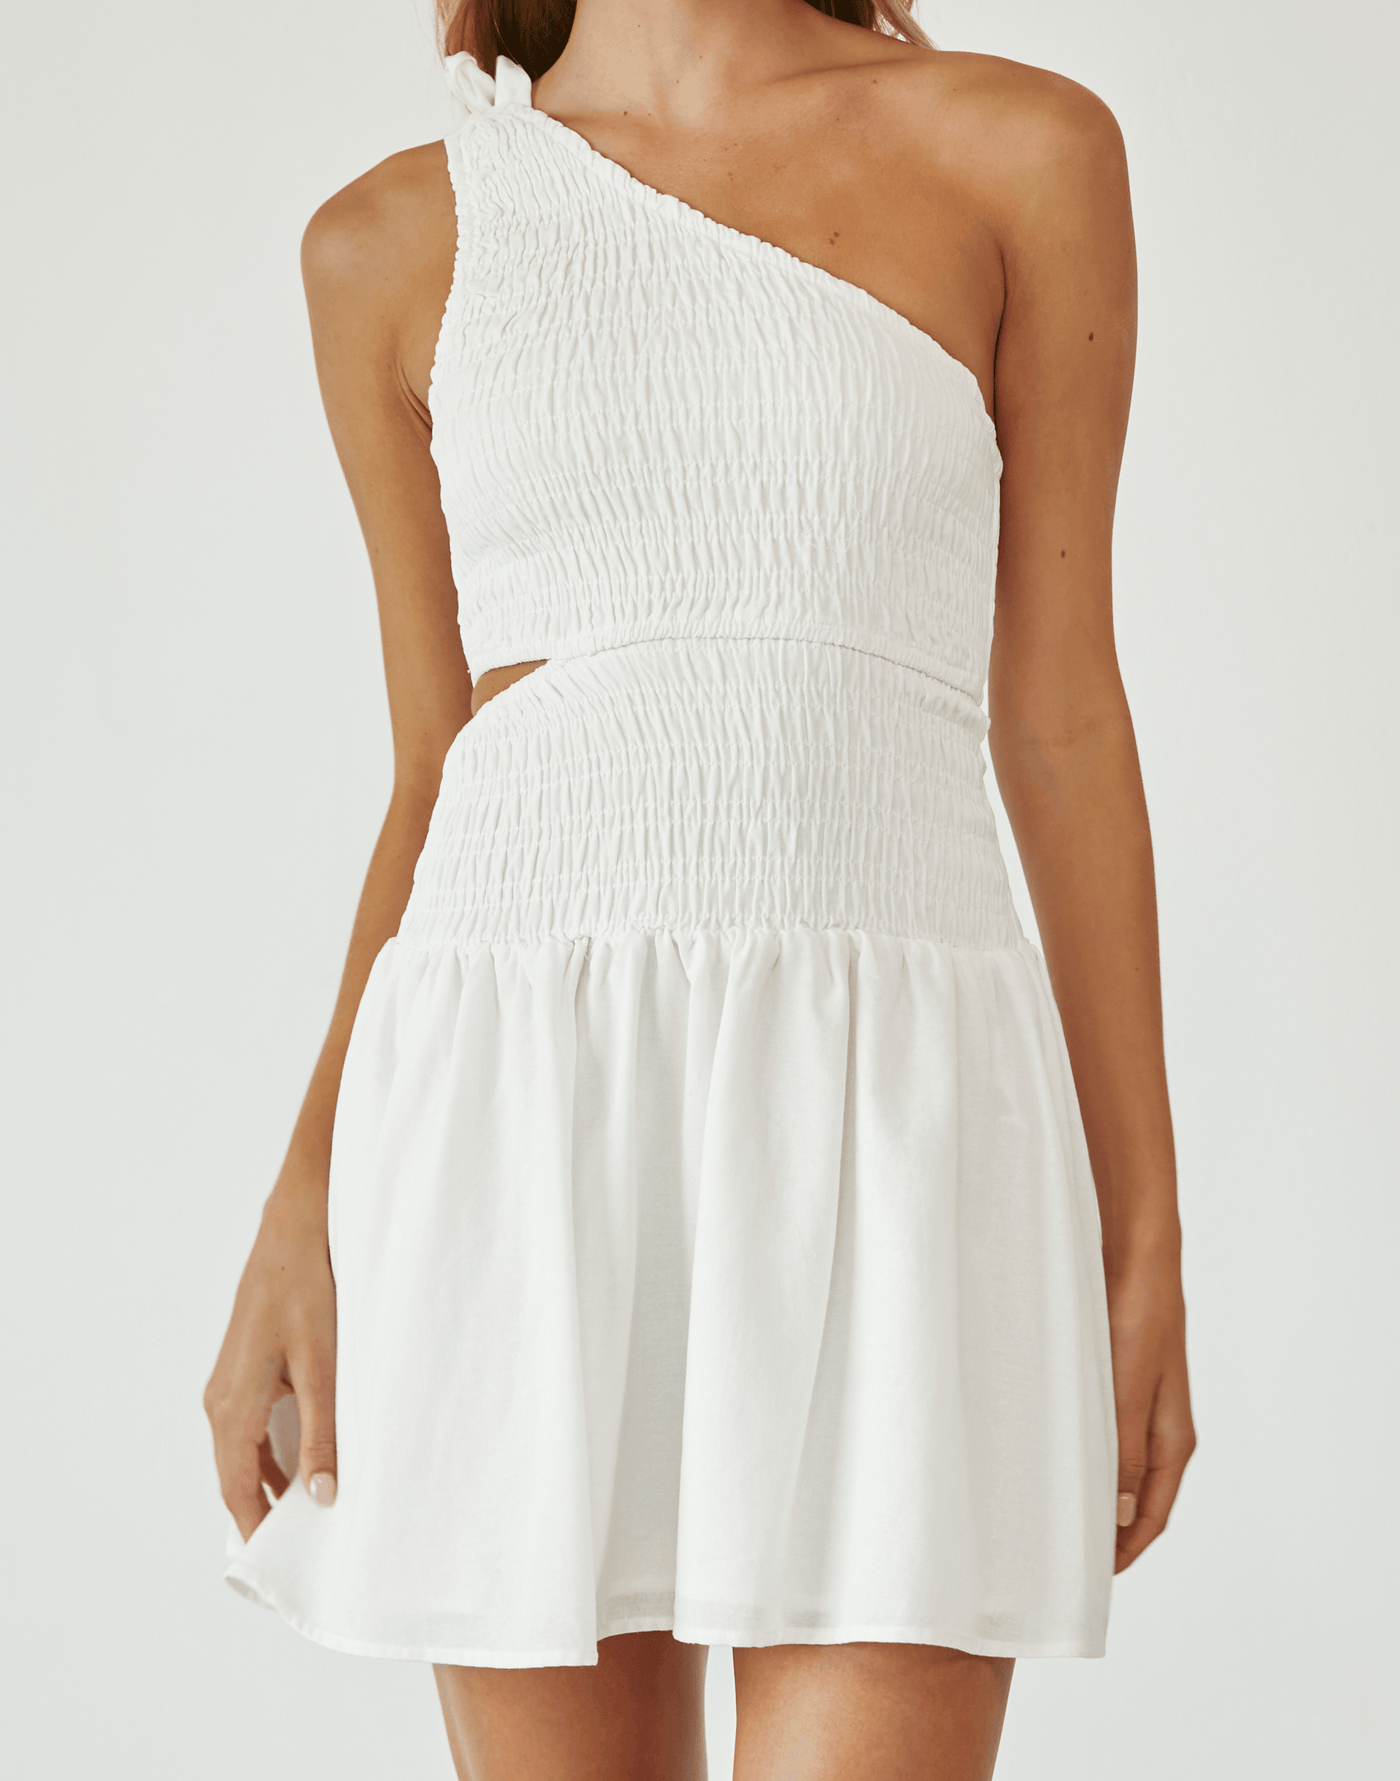 Mailee Mini Dress (White) - One Shoulder Mini Dress - Women's Dress - Charcoal Clothing